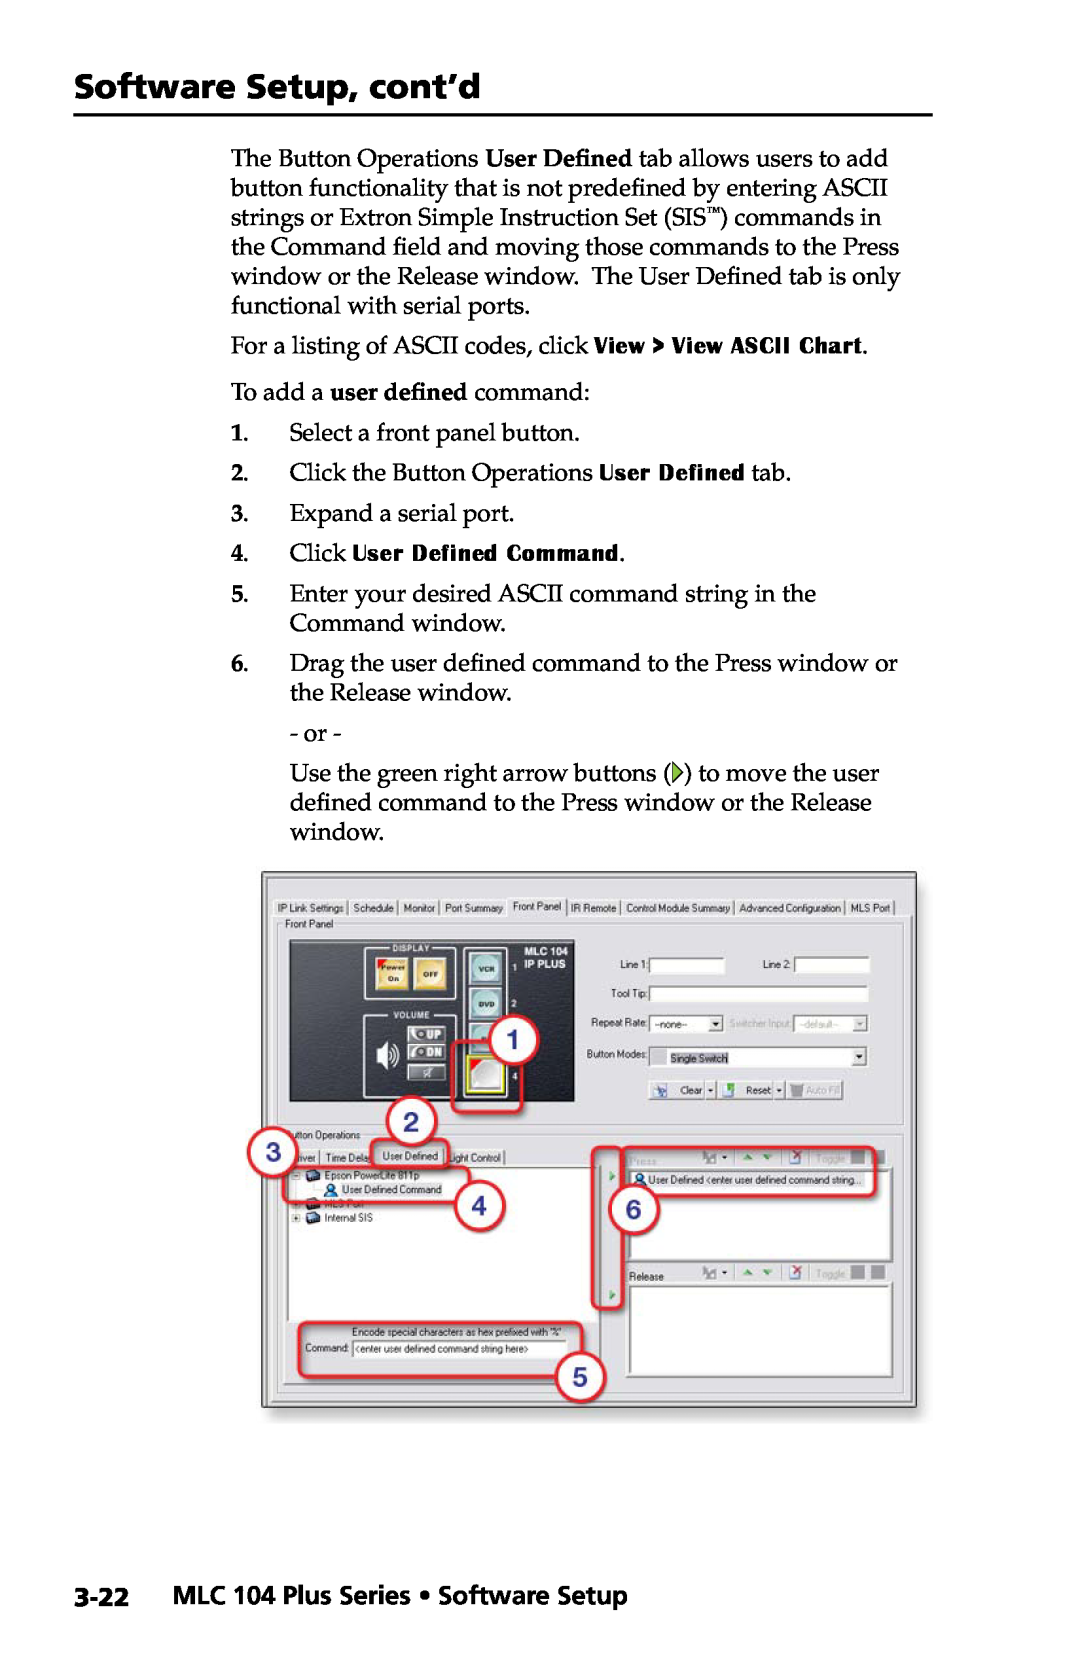 Extron electronic setup guide MLC 104 Plus Series Software Setup, Click User Defined Command, Software Setup, cont’d 